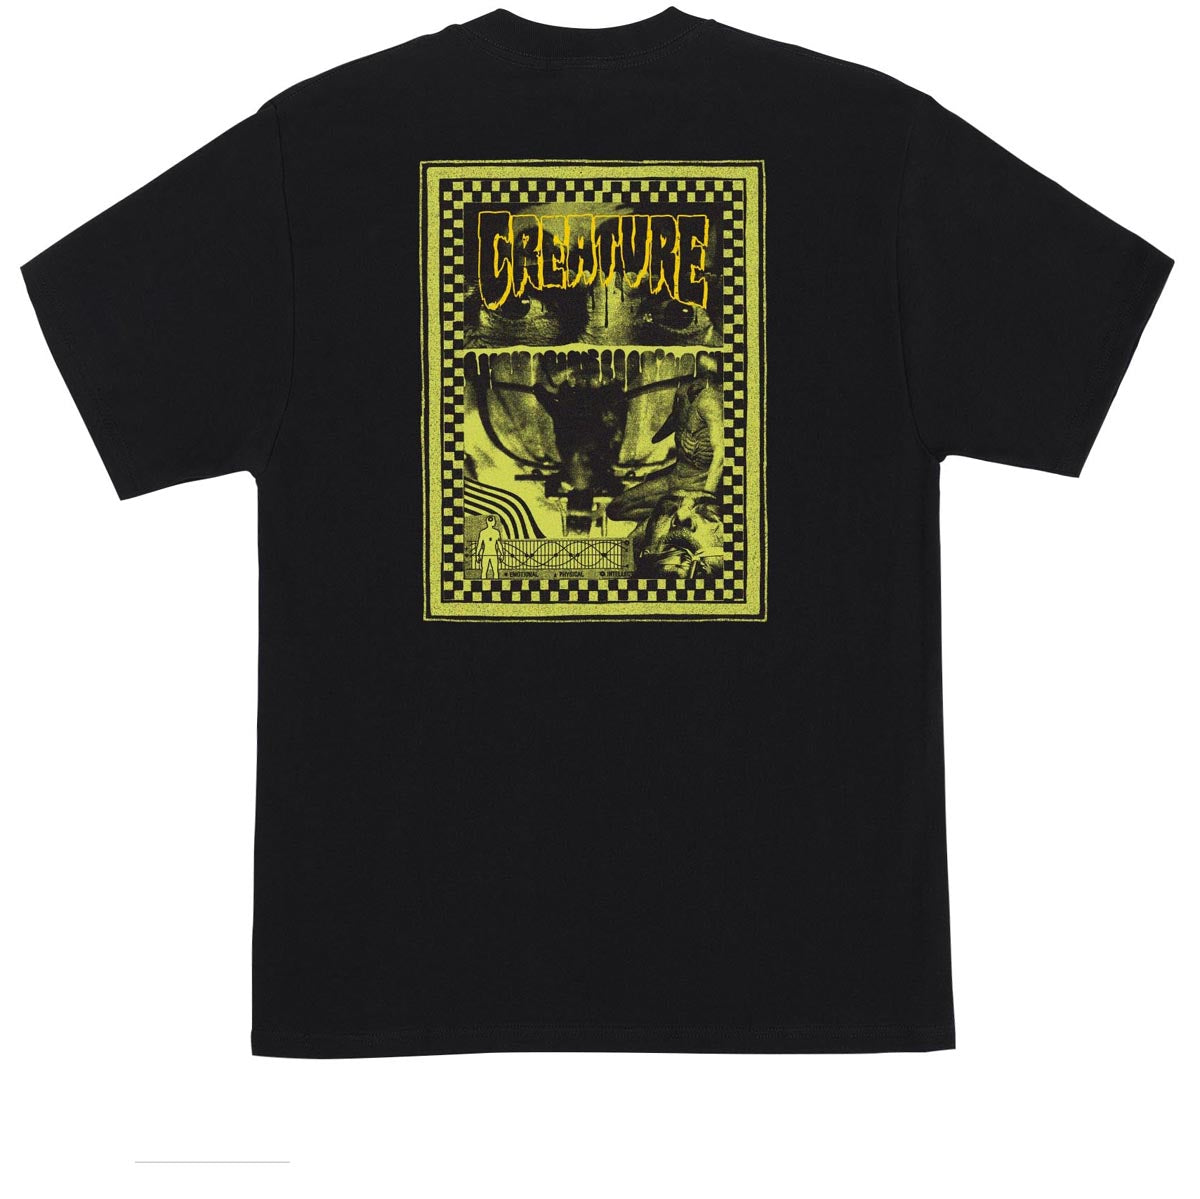 Creature Brainwash T-Shirt - Black image 1